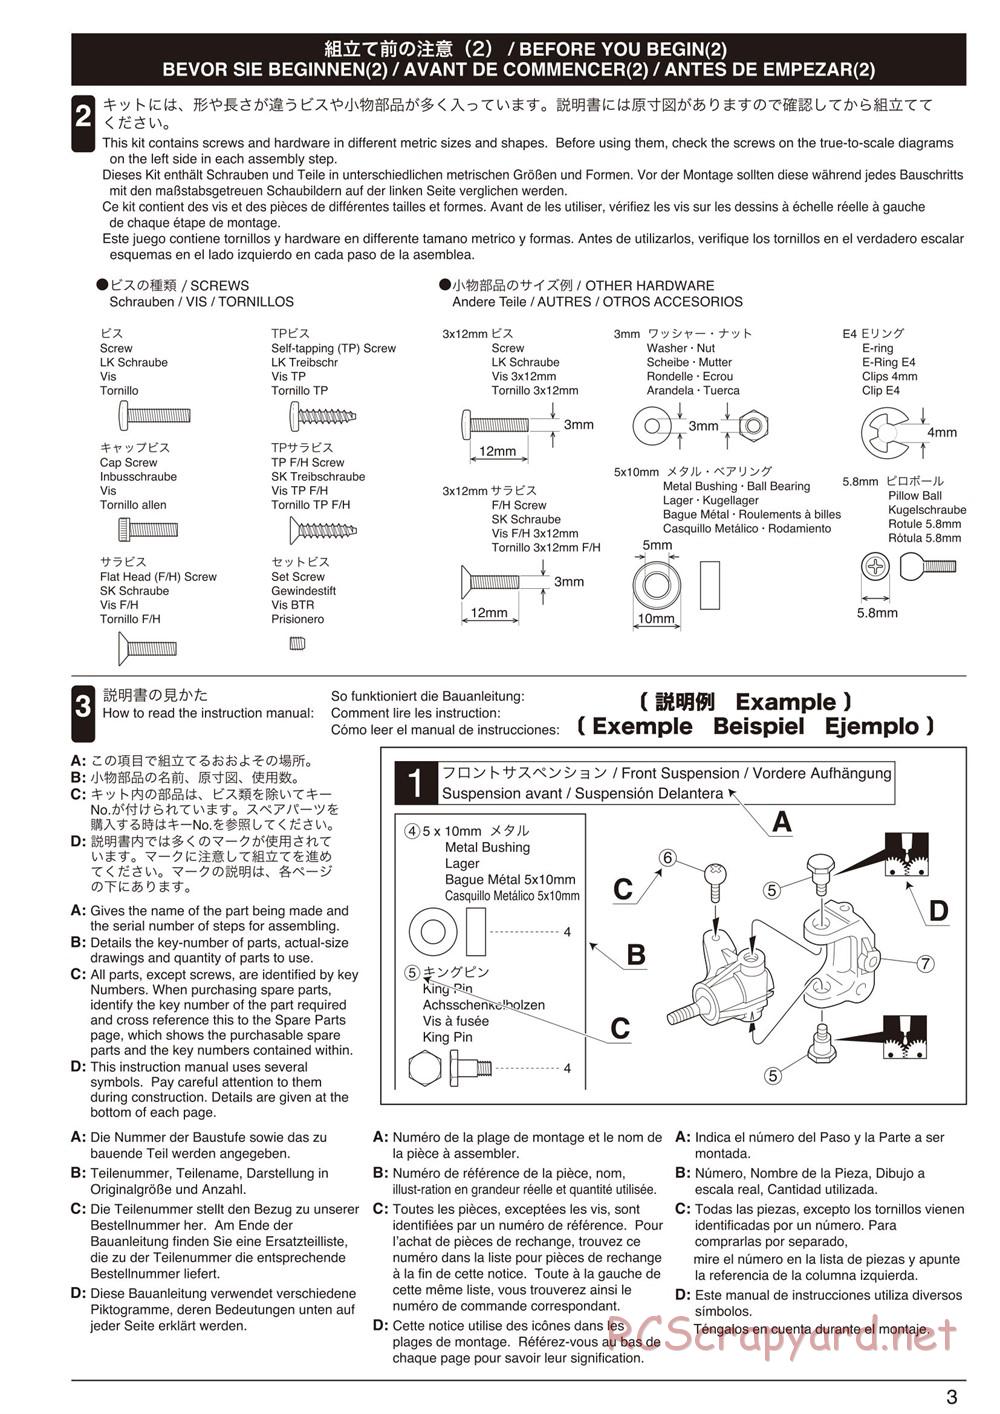 Kyosho - Inferno NEO ST Race Spec - Manual - Page 3